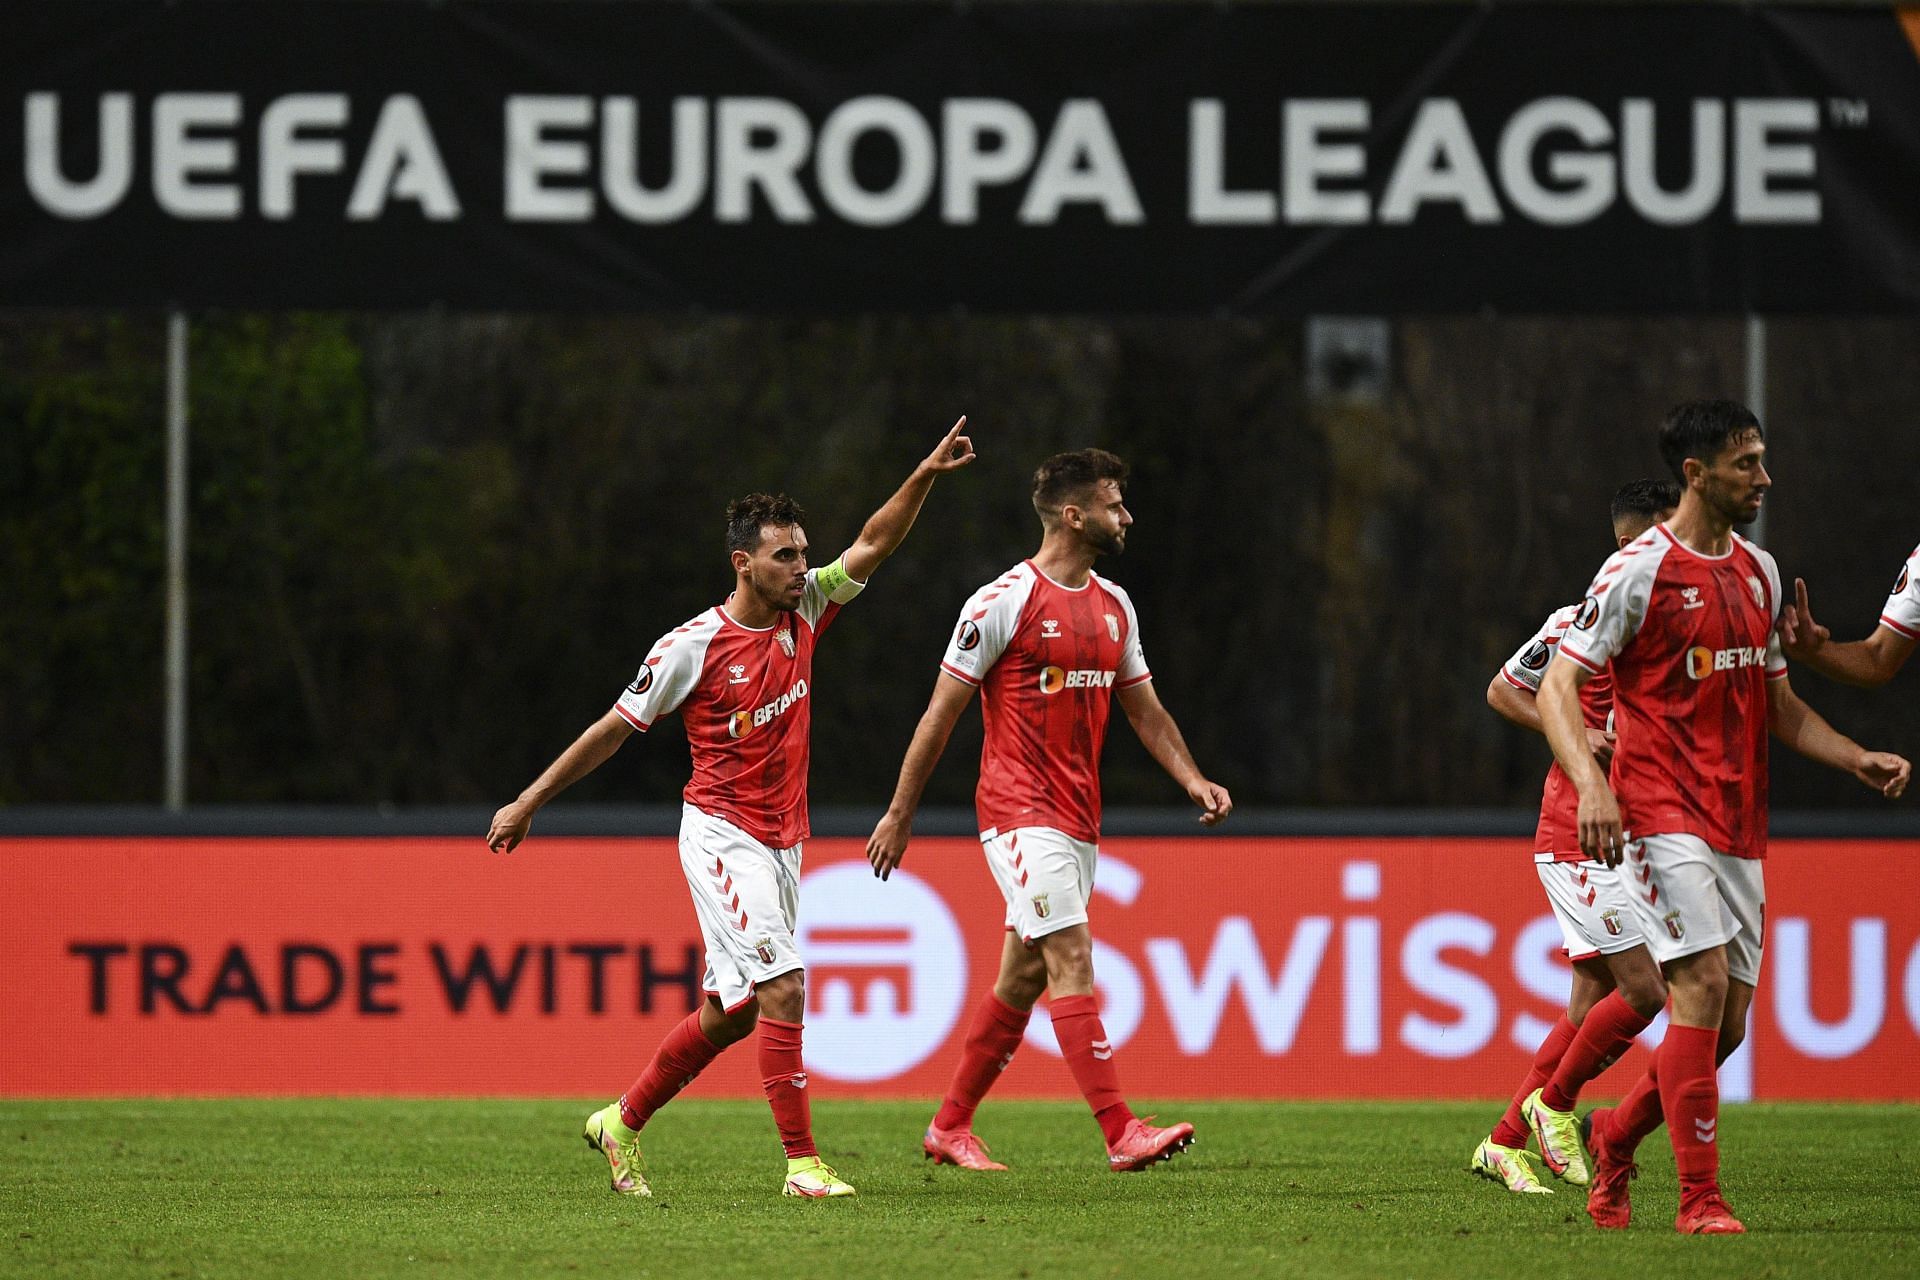 Braga face Sheriff Tiraspol in their Europa League playoffs fixture on Thursday